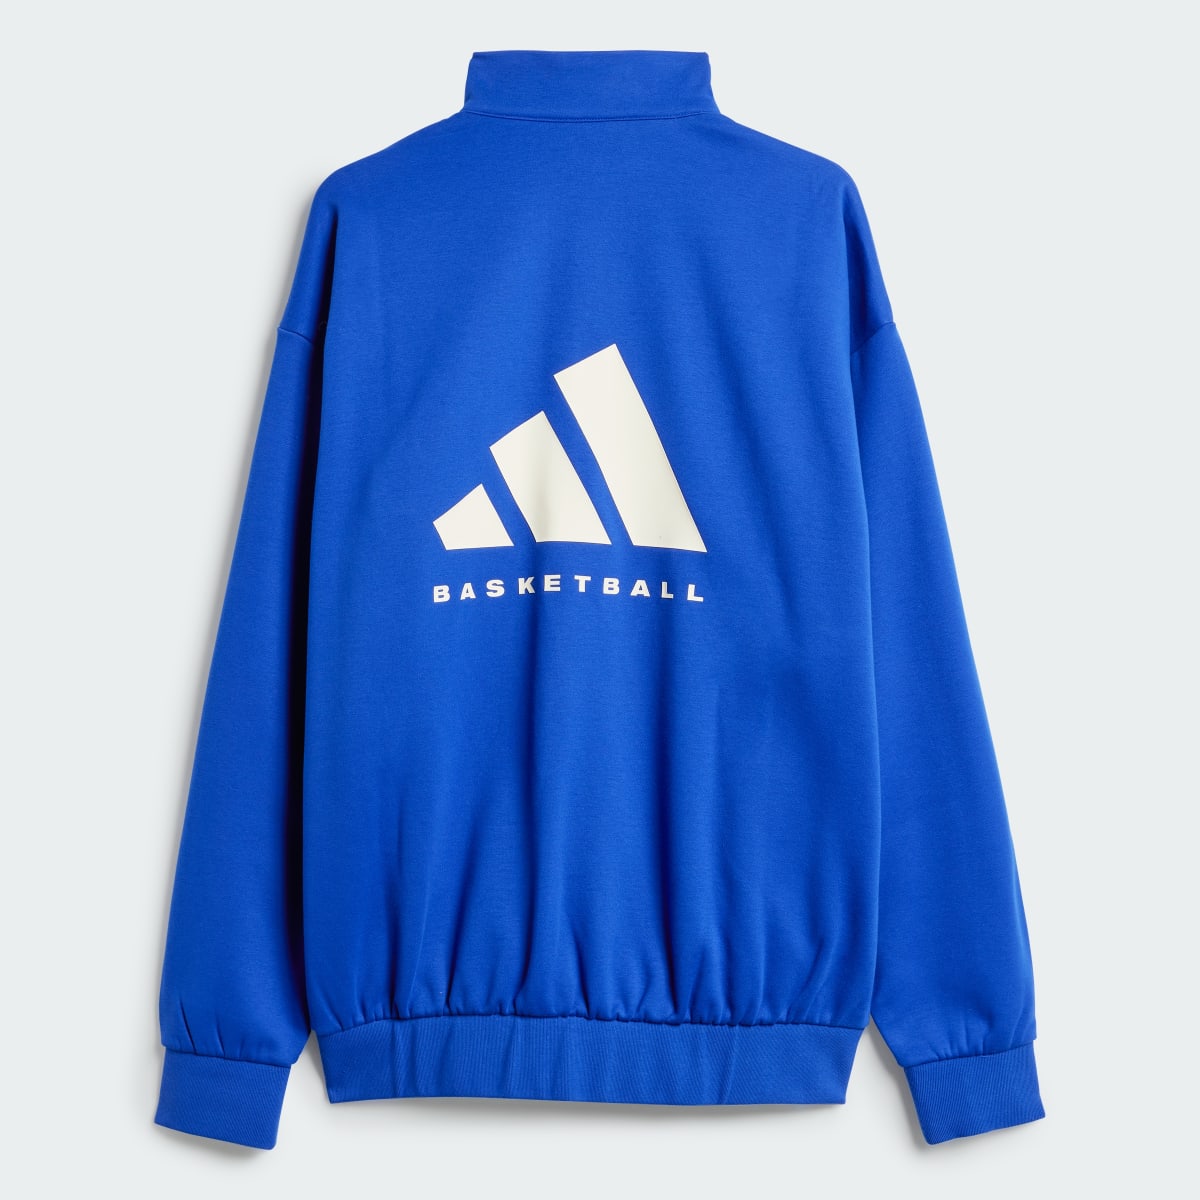 Adidas Basketball Half-Zip Sweatshirt. 5